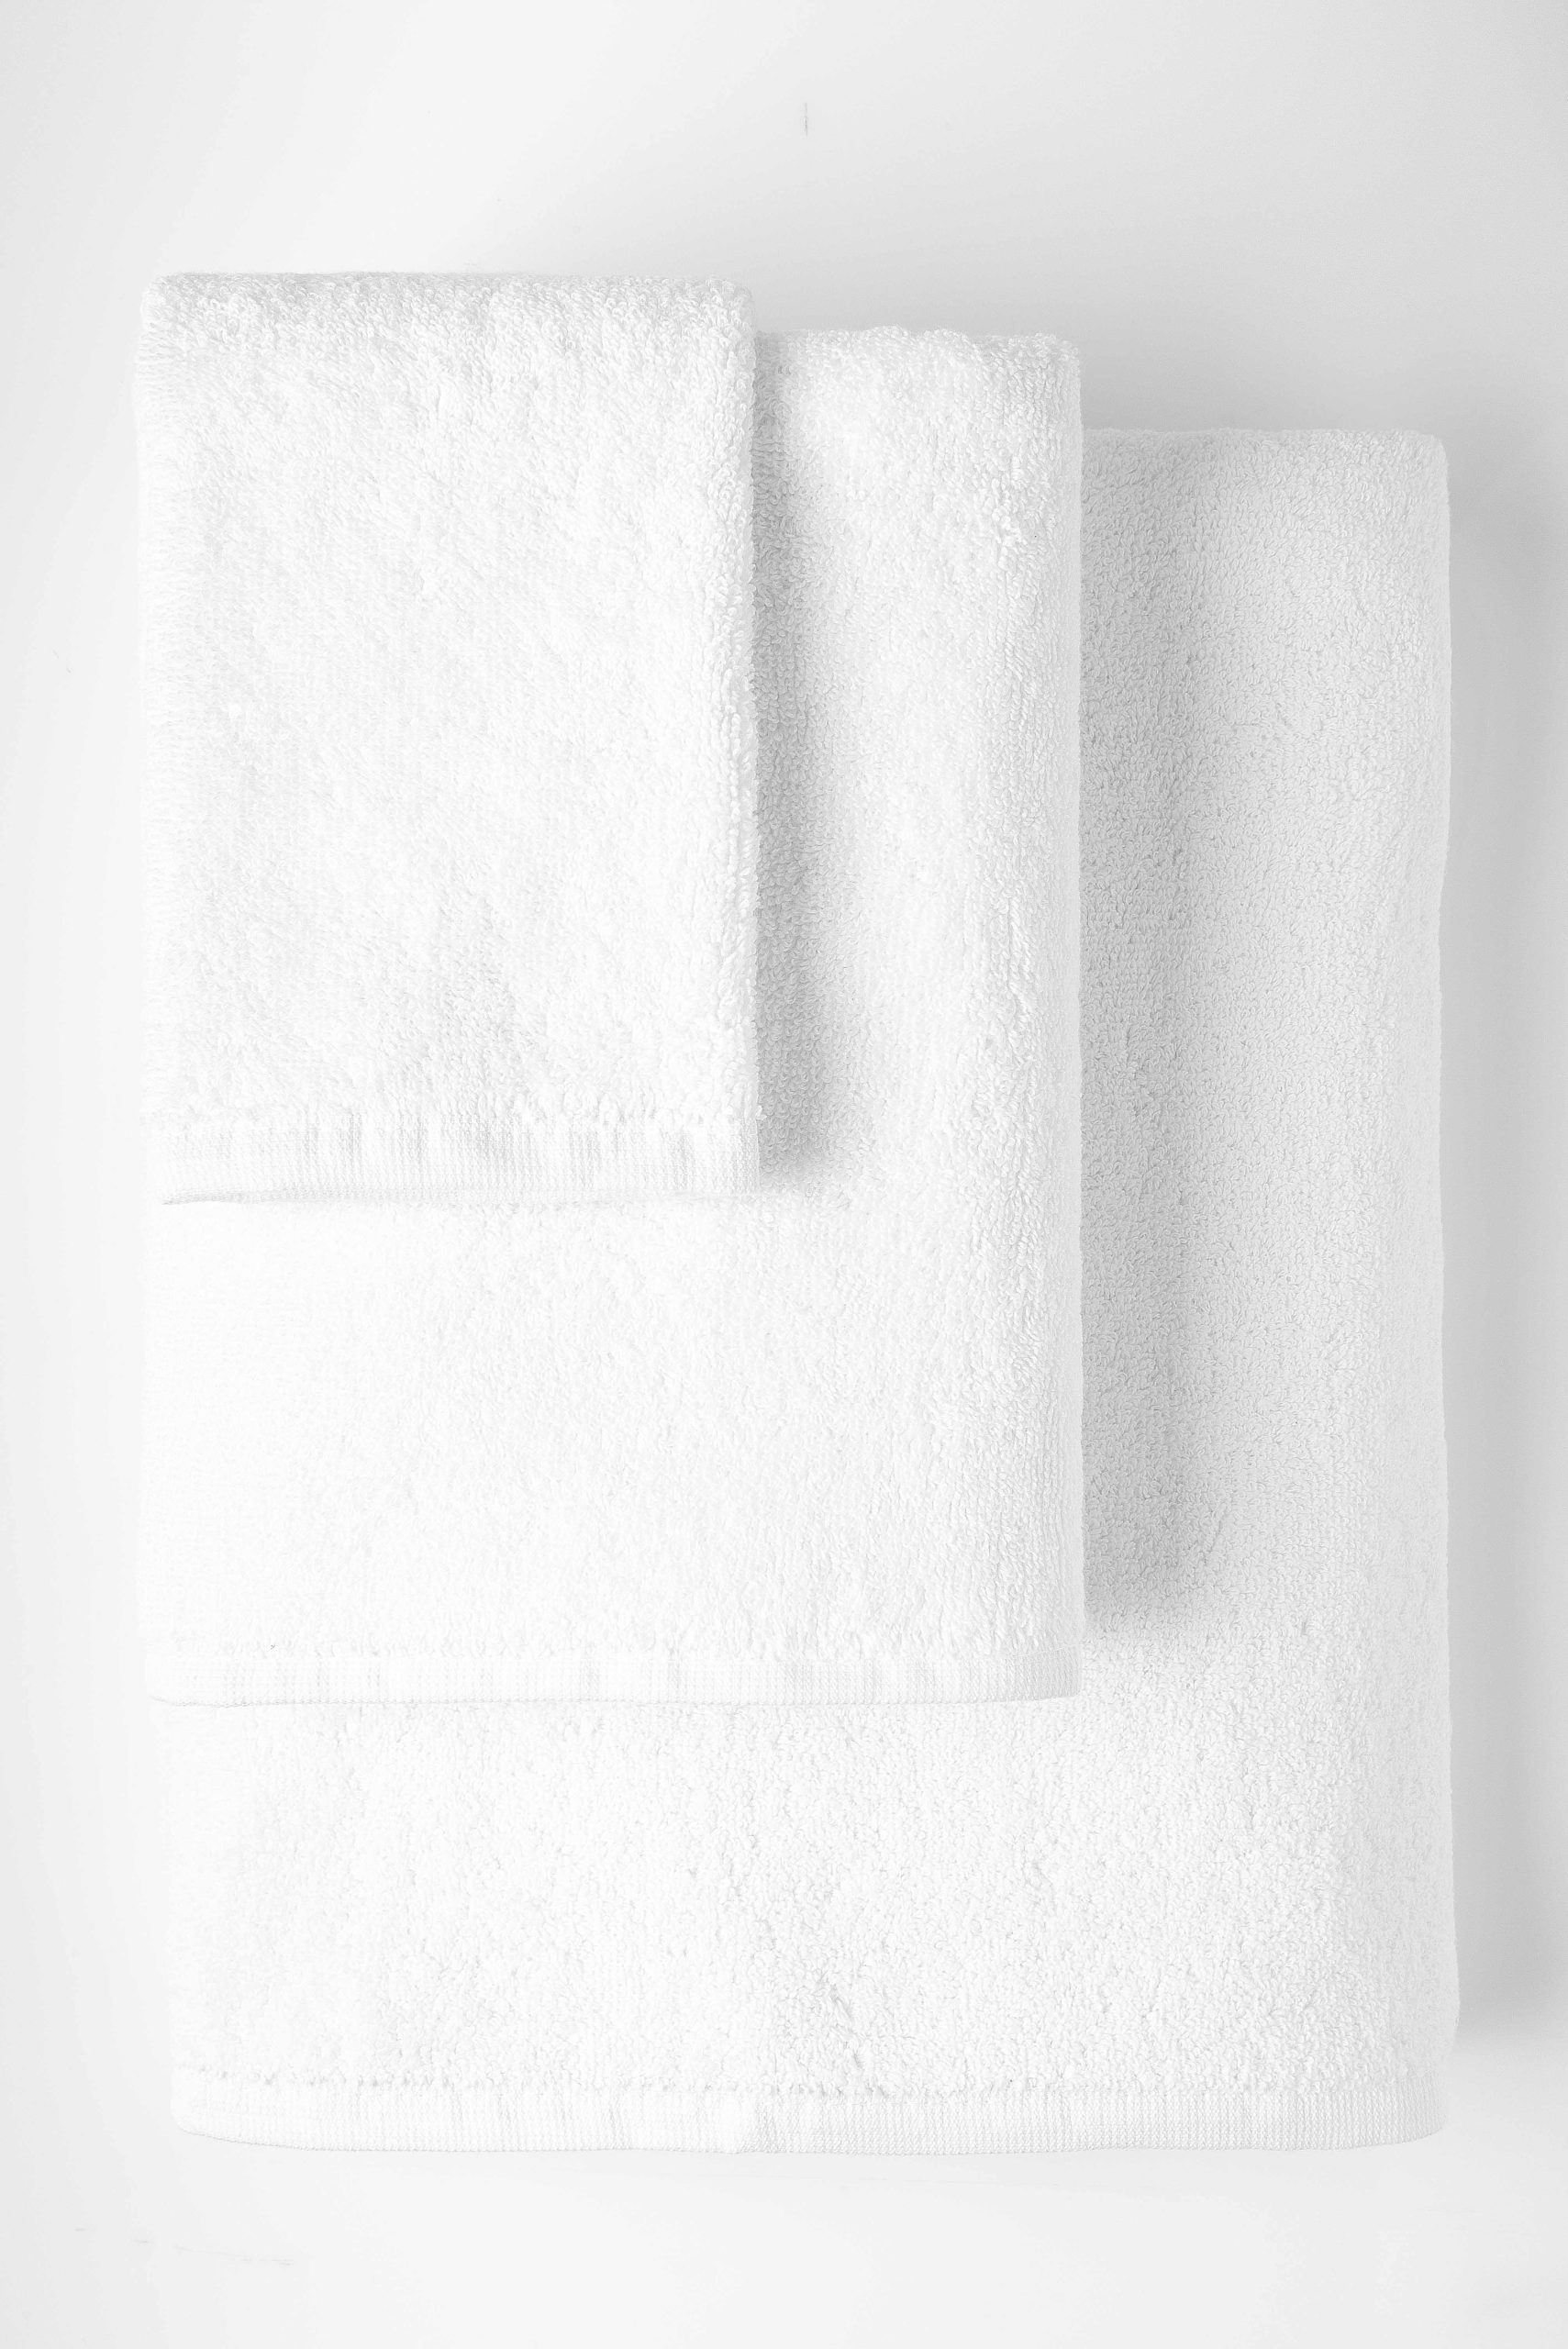 AD hotelska oprema Hotelski ručnik plain 30x30 (4 komada) slika proizvoda